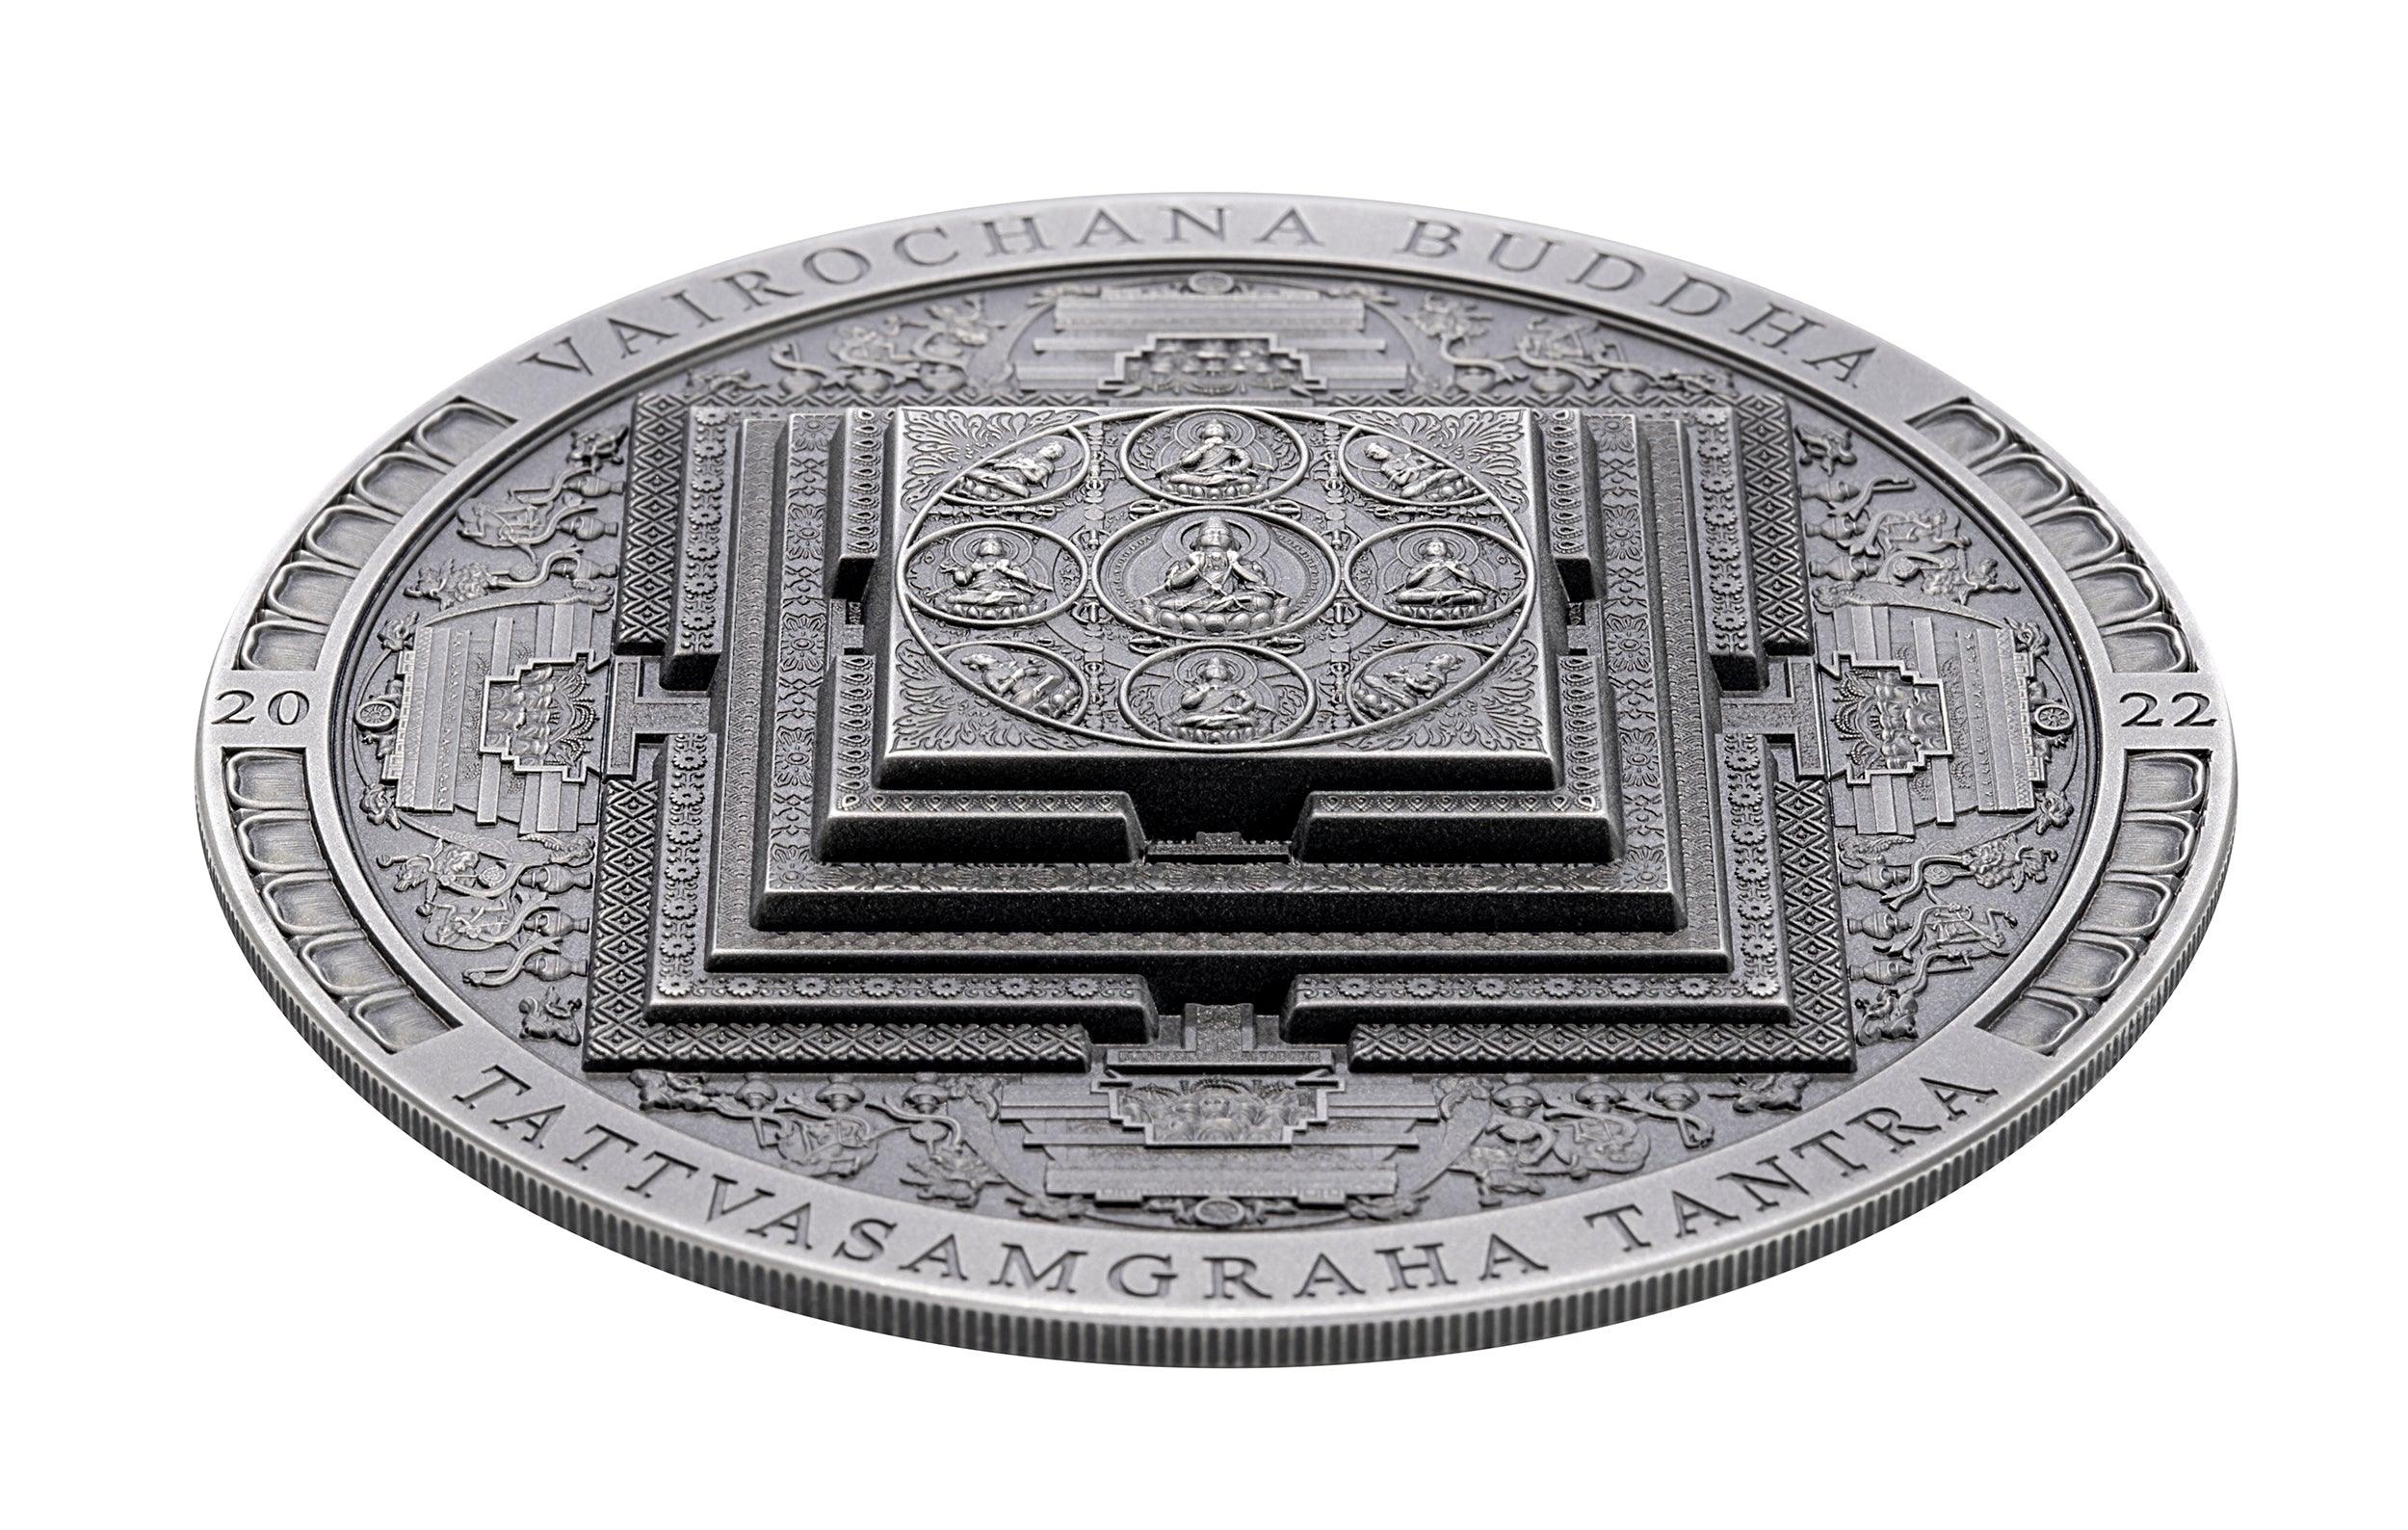 VAIROCHANA BUDDHA MANDALA Archeology Symbolism Antiqued 3 Oz Silver Coin 2000 Togrog Mongolia 2022 - PARTHAVA COIN